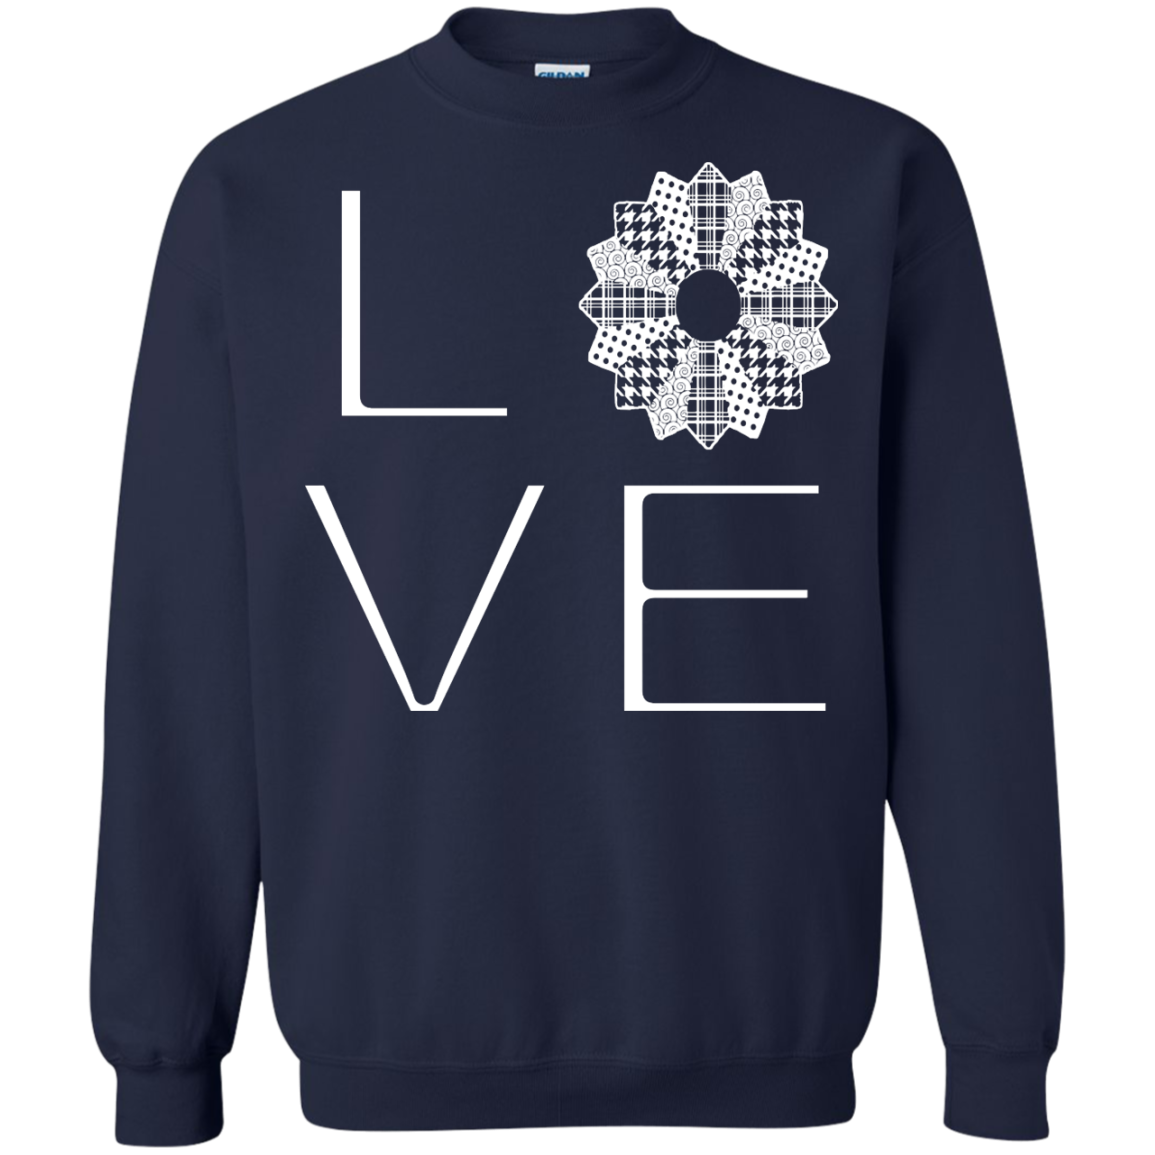 LOVE Quilting Crewneck Sweatshirts - Crafter4Life - 4